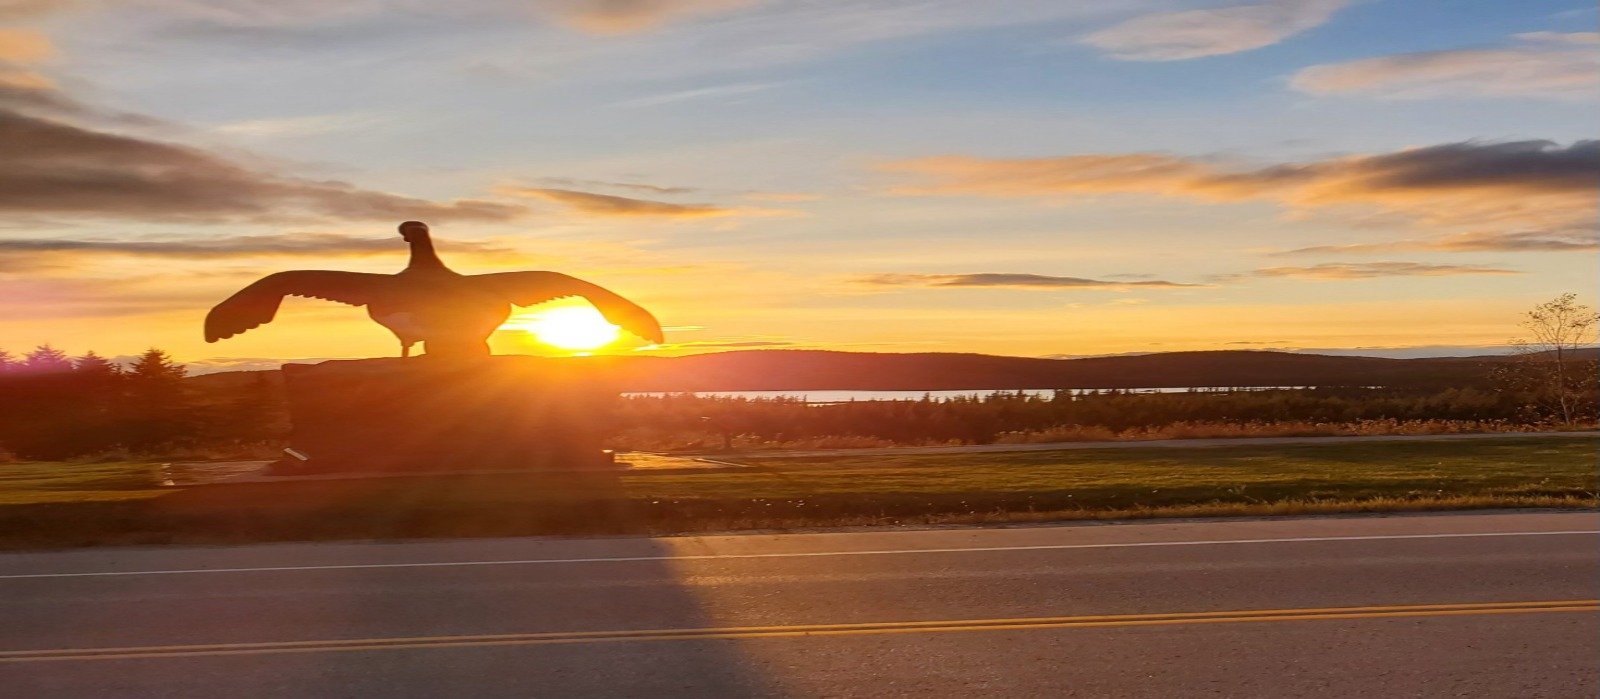 Wawa Goose in the sunset